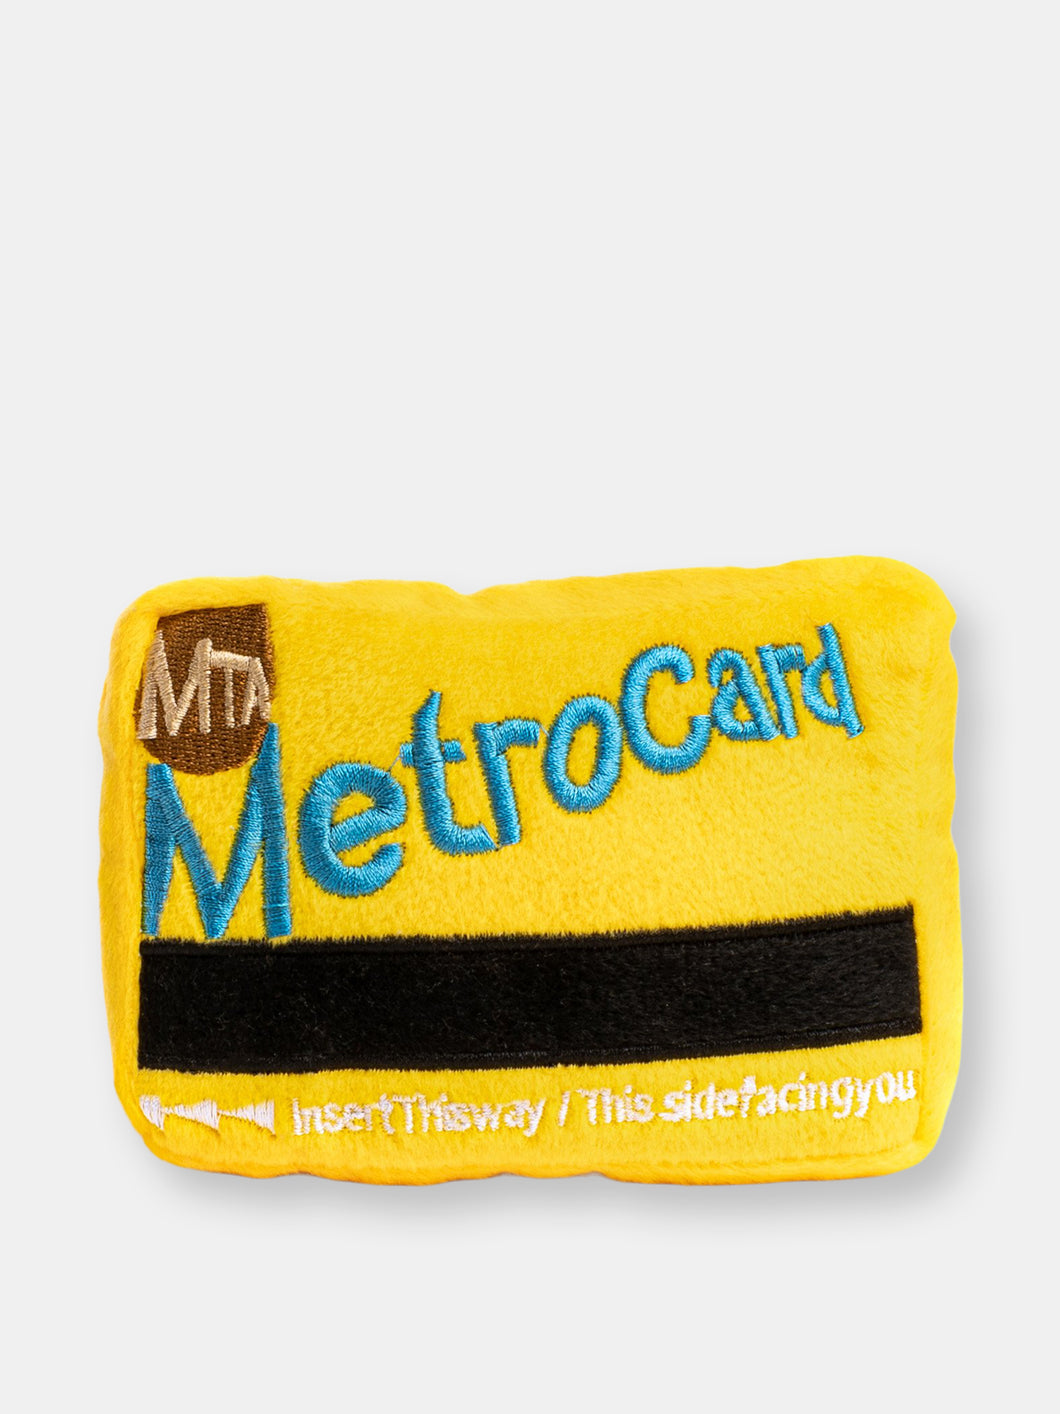 MTA NYC Metrocard